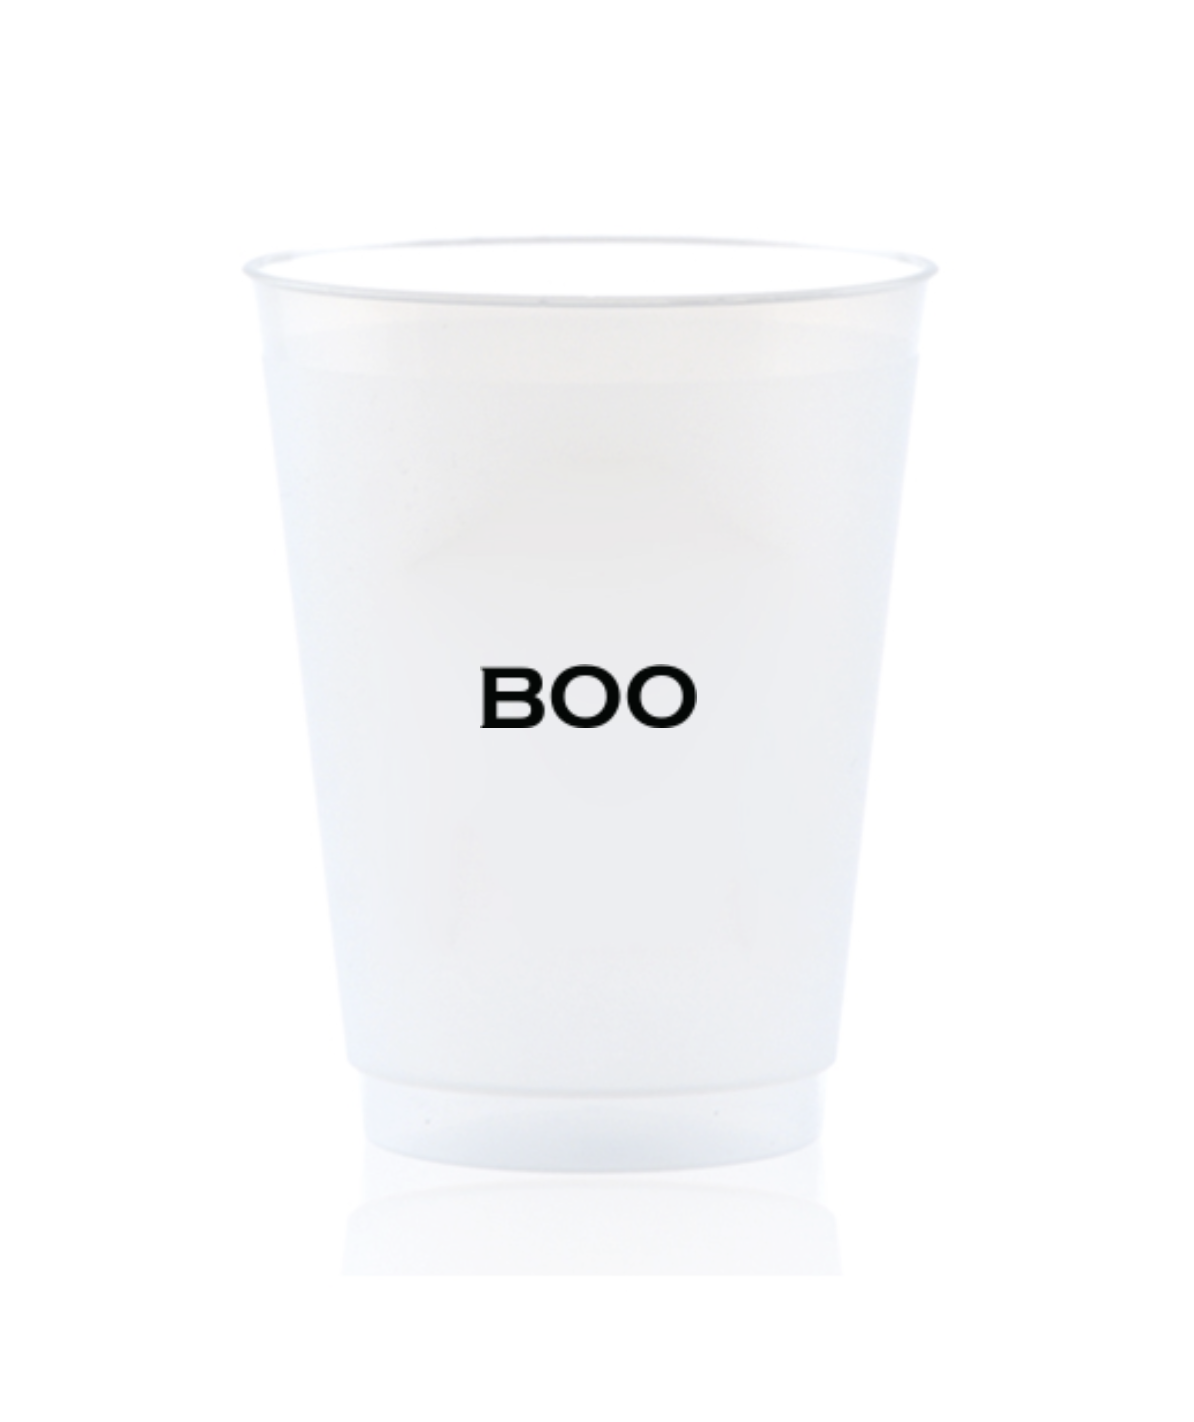 Shatterproof Cups - Boo